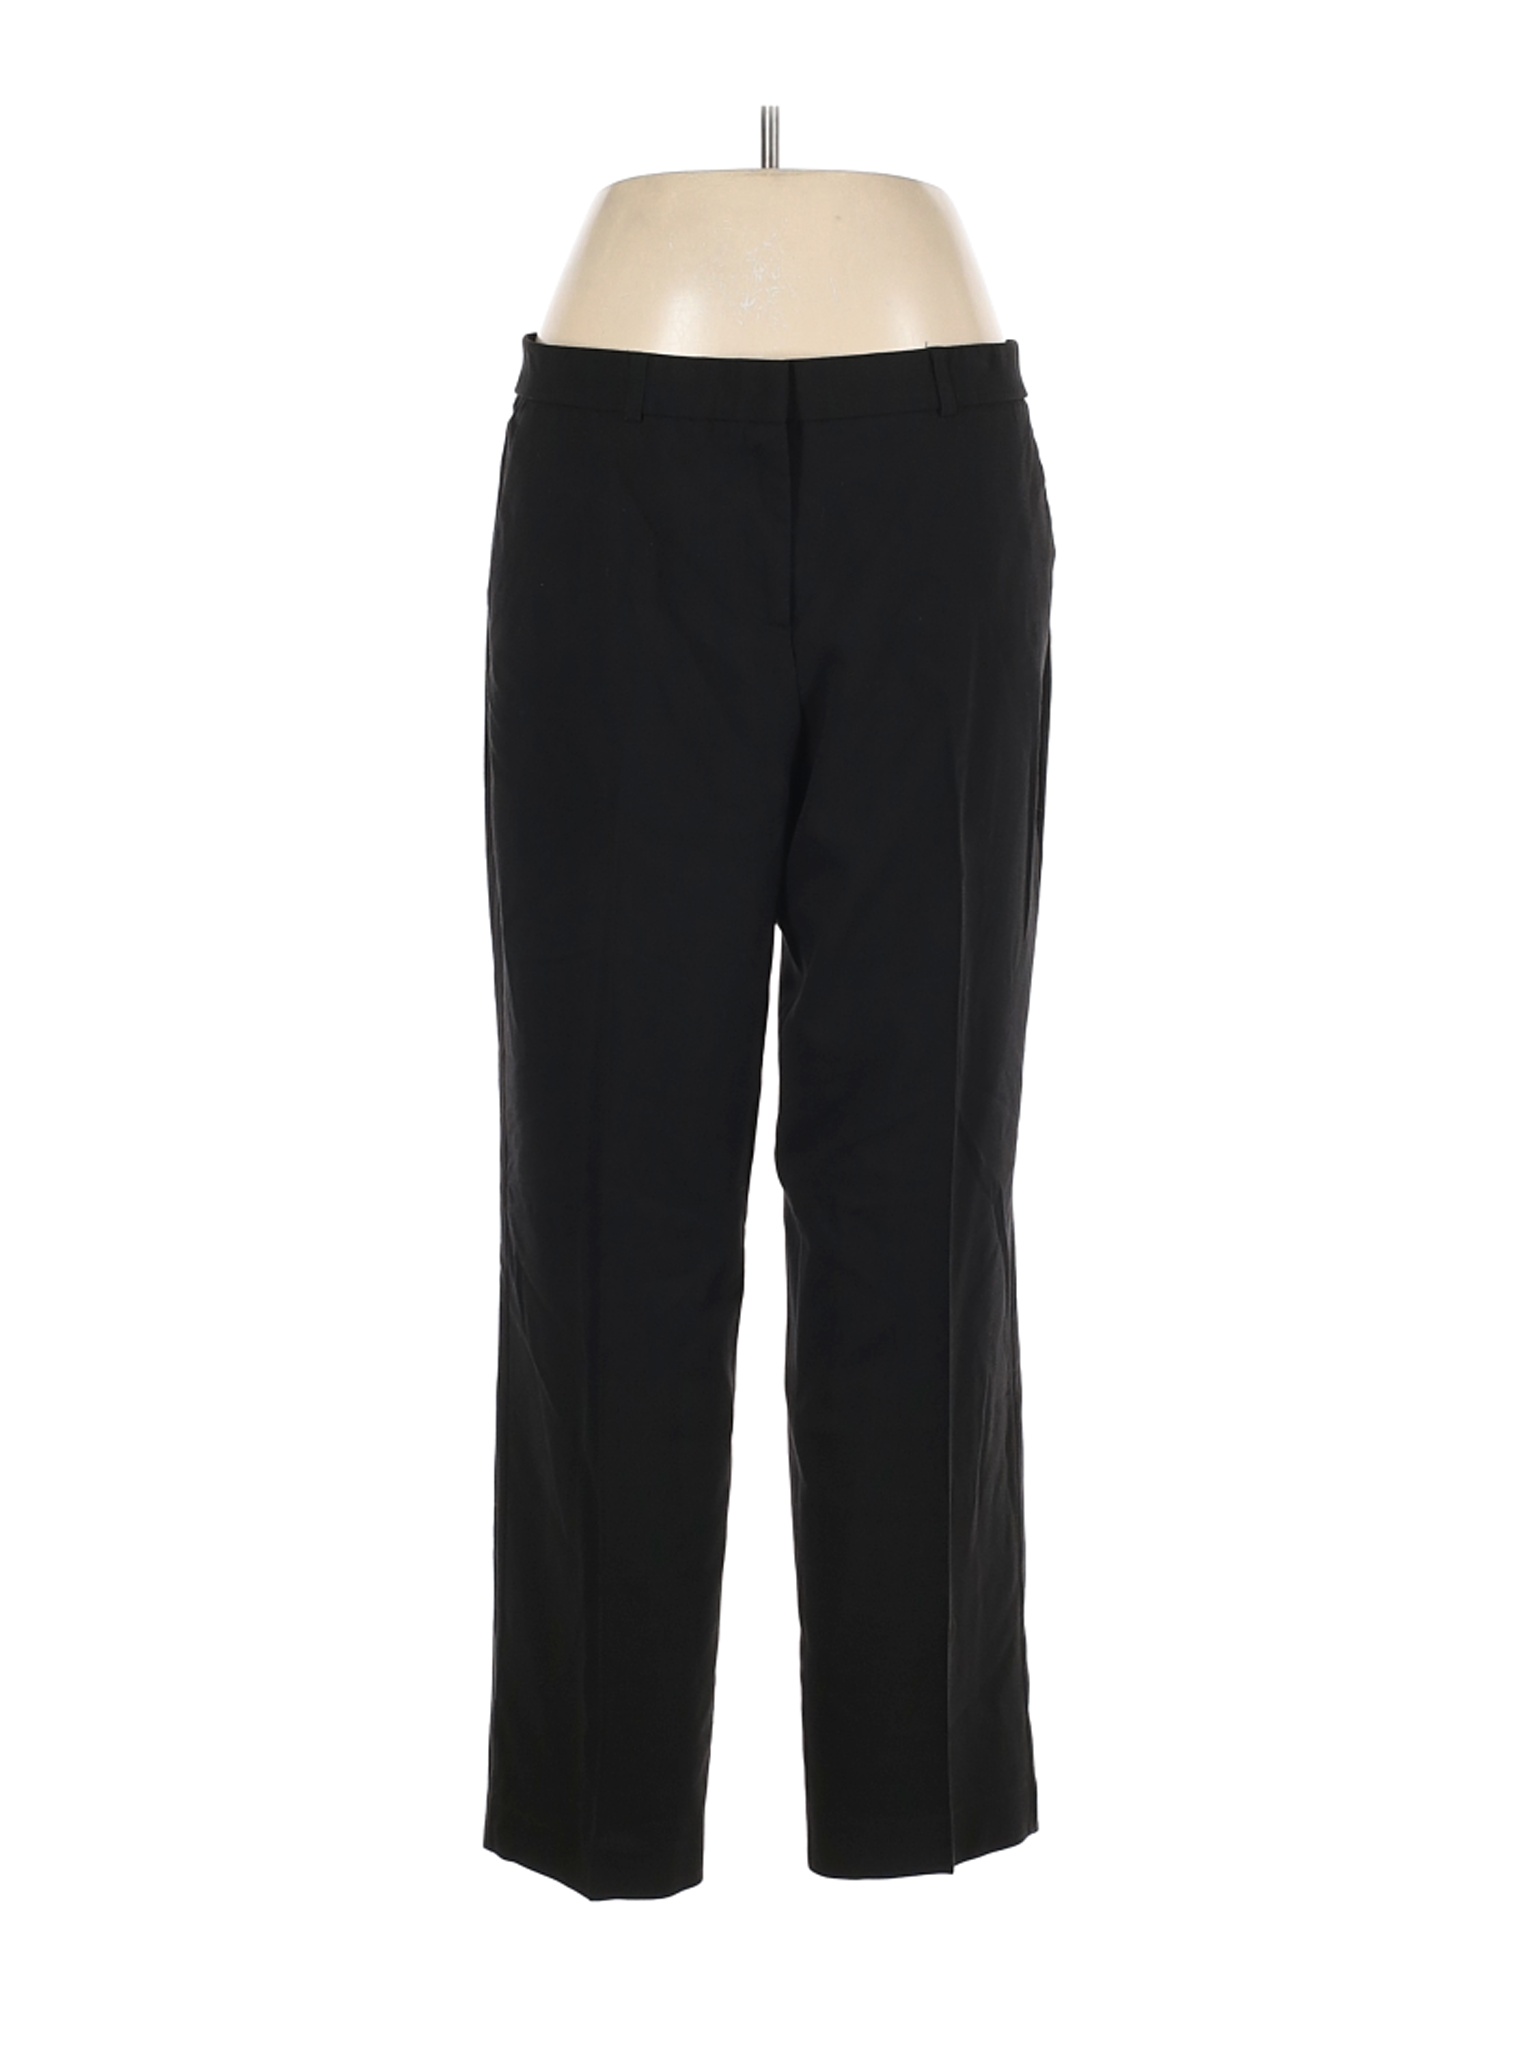 Sag Harbor Women Black Dress Pants 16 Petites | eBay